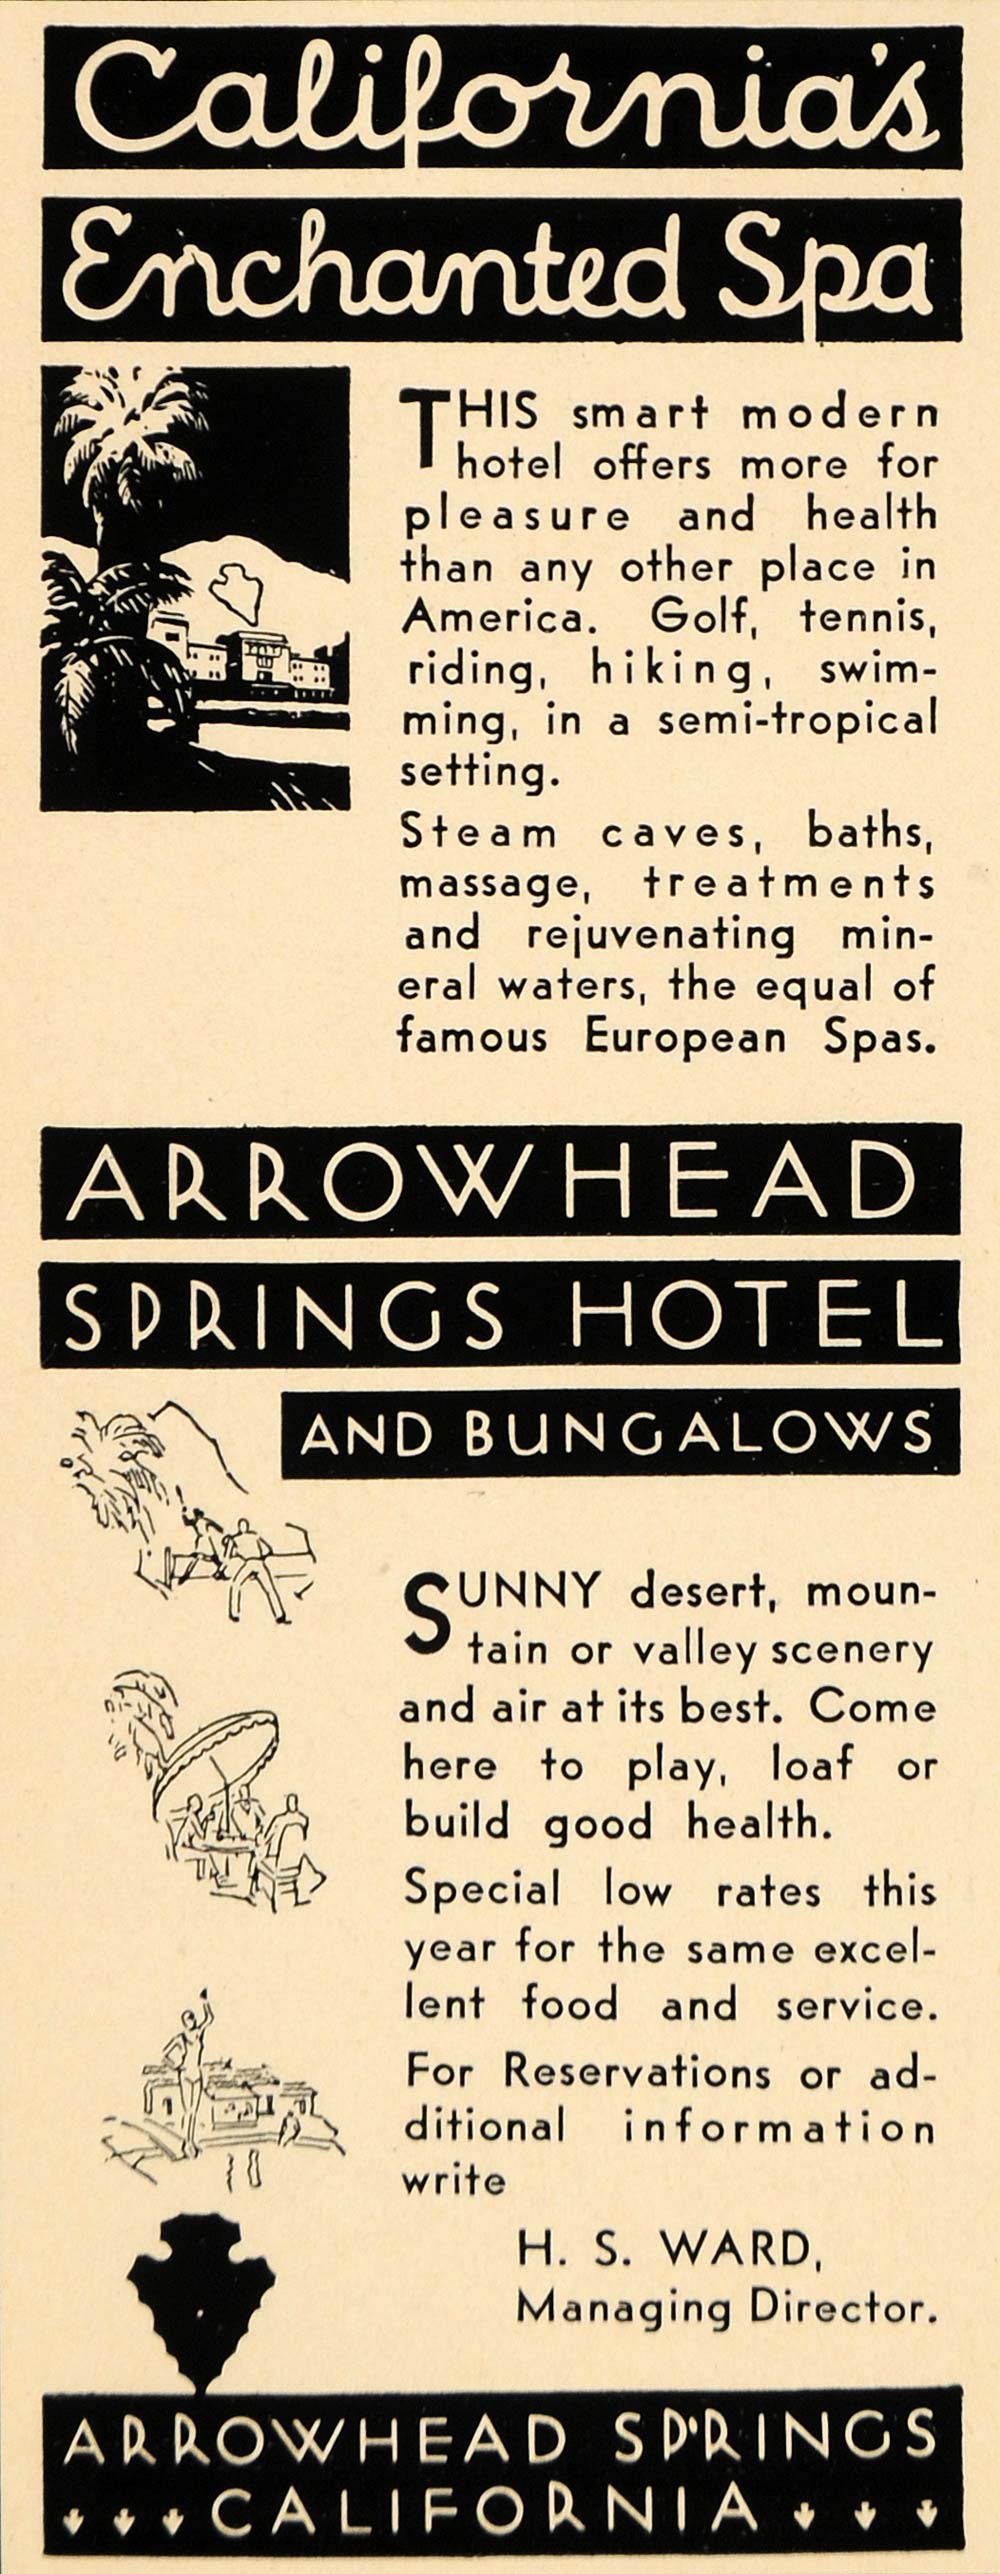 1931 Ad Arrowhead Spring Hotel California Enchanted Spa - ORIGINAL F1A